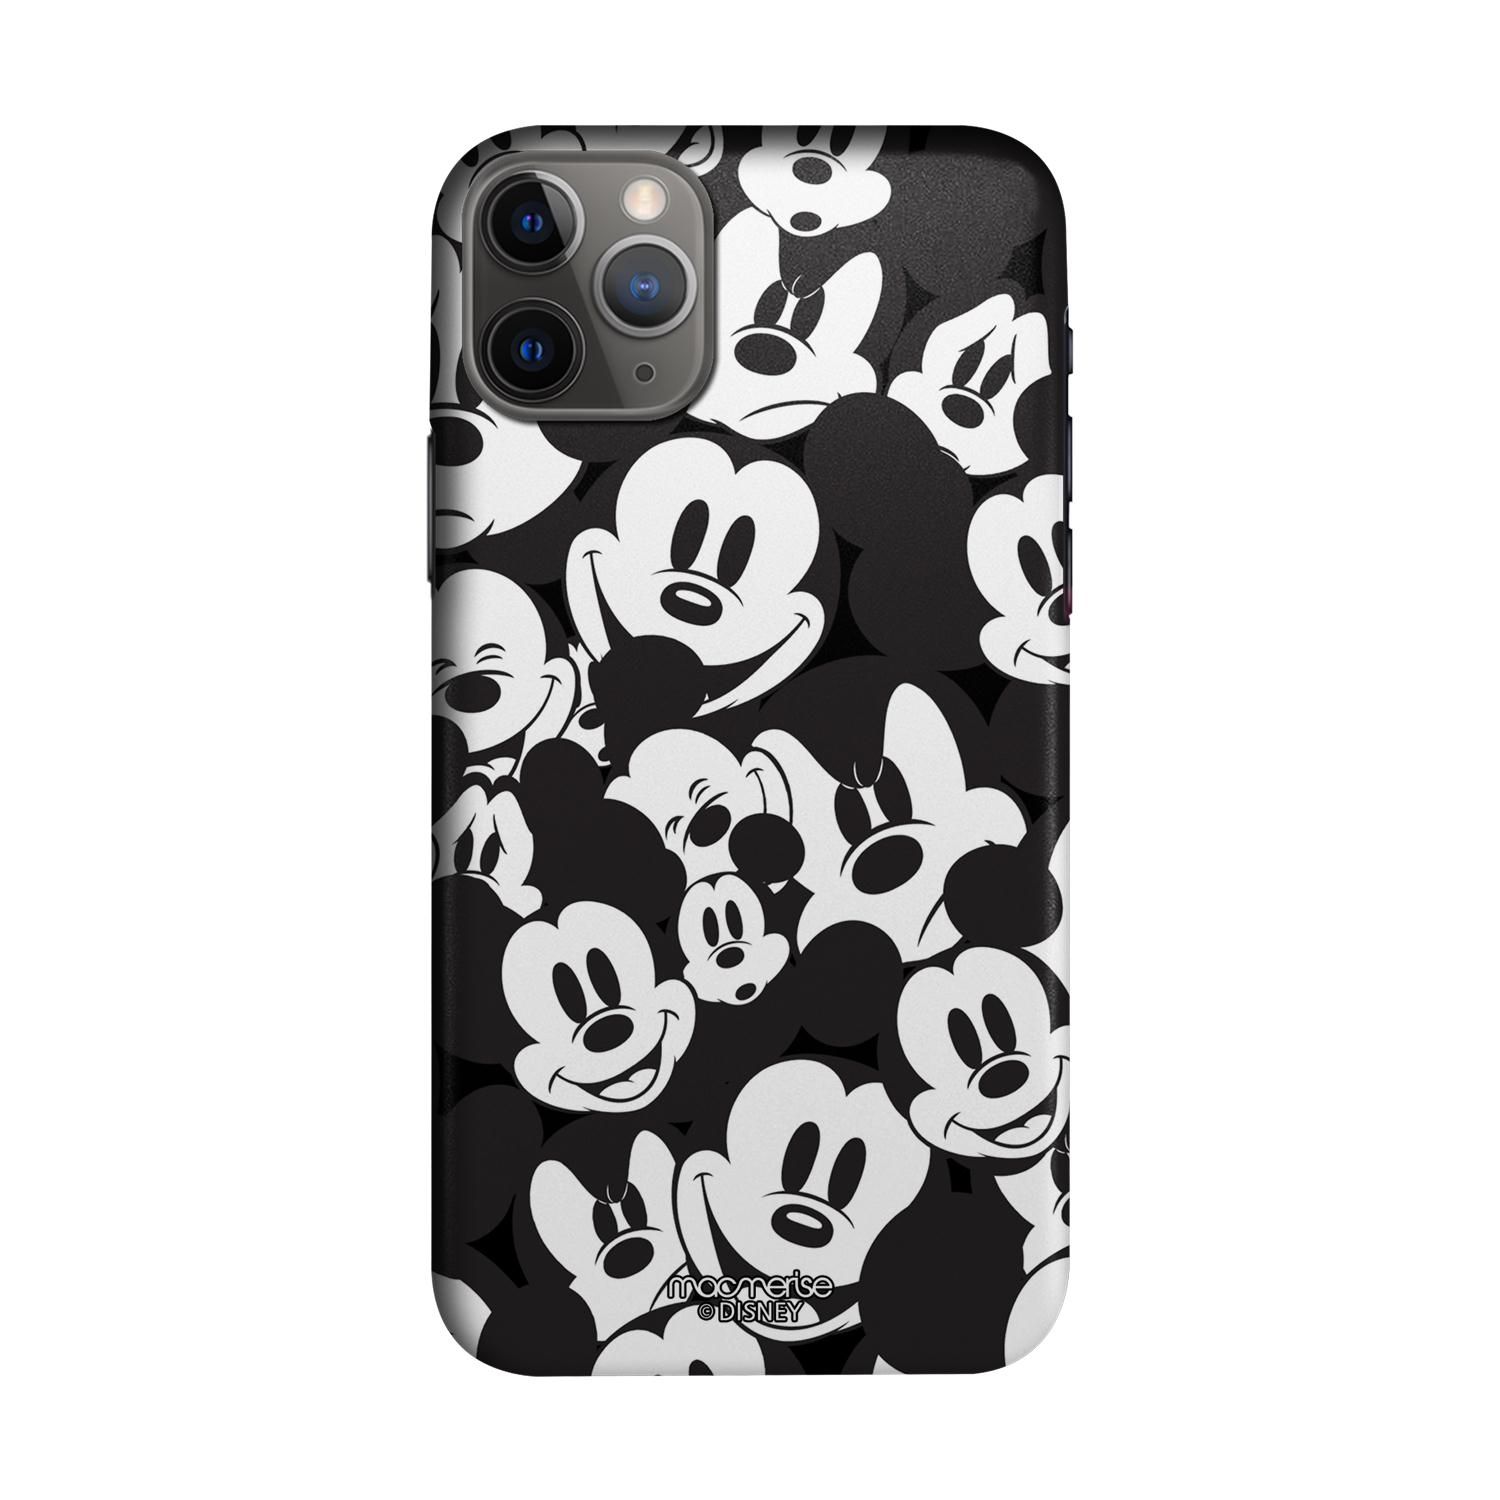 Buy Mickey Smileys - Sleek Phone Case for iPhone 11 Pro Online